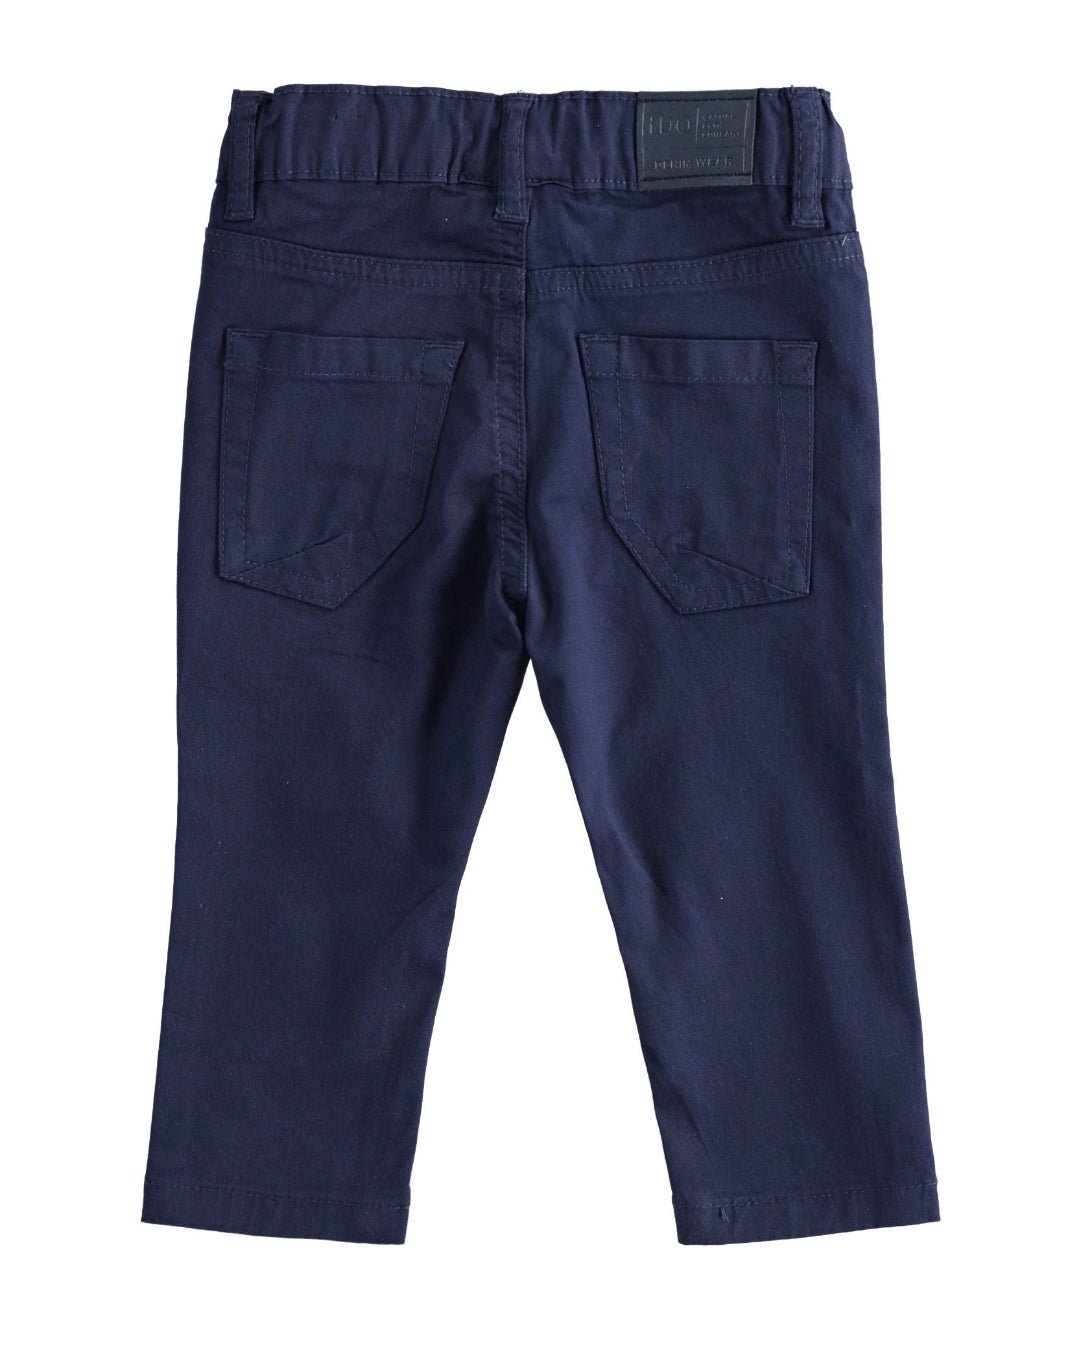 Pantalone lungo cotone - Coccole e Ricami |email: info@coccoleericami.shop| P.Iva 09642670583